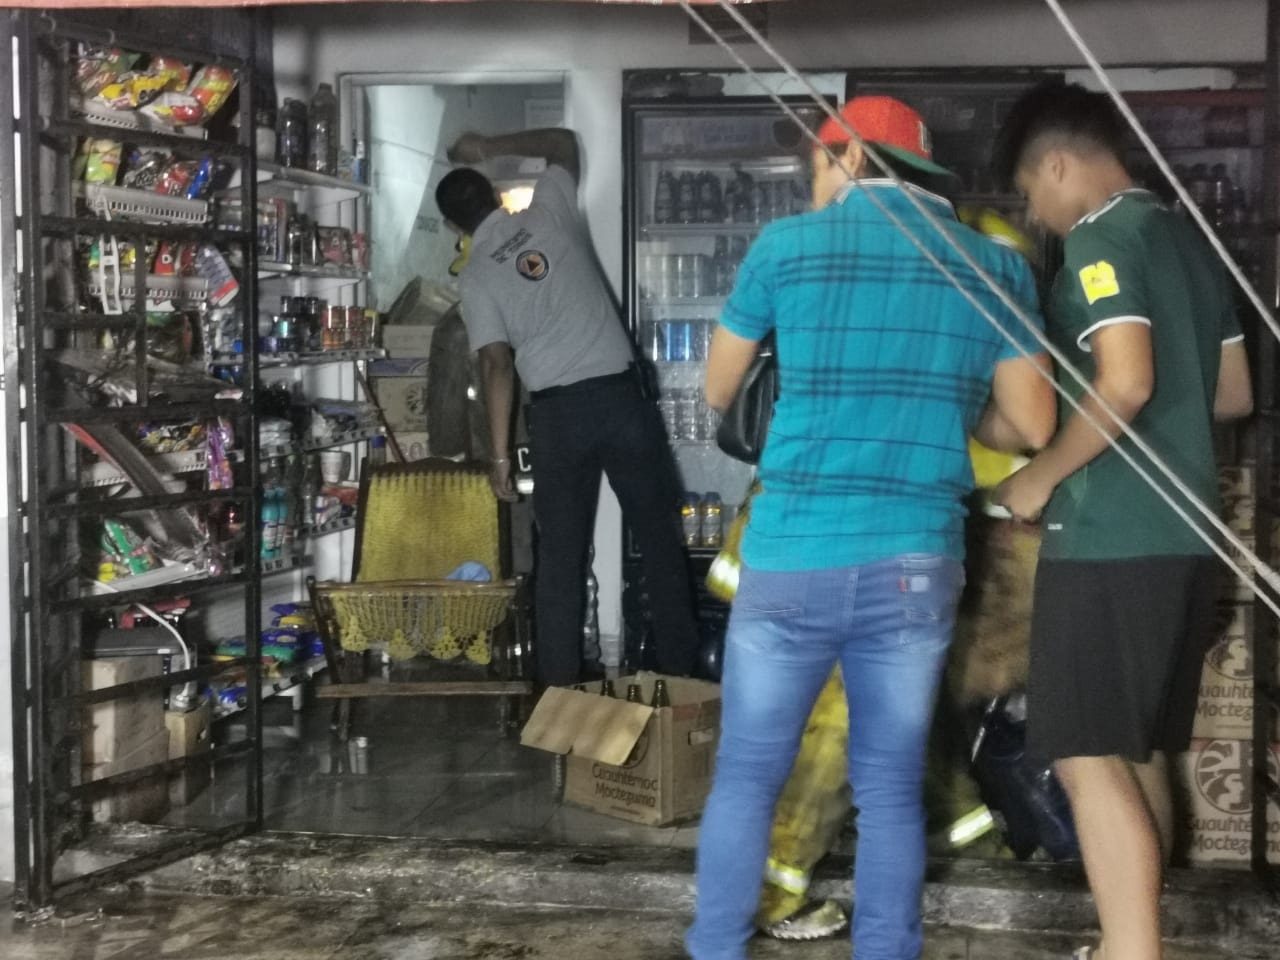 Hombres arrojan gasolina e incendian un expendio de cerveza en Ciudad del Carmen